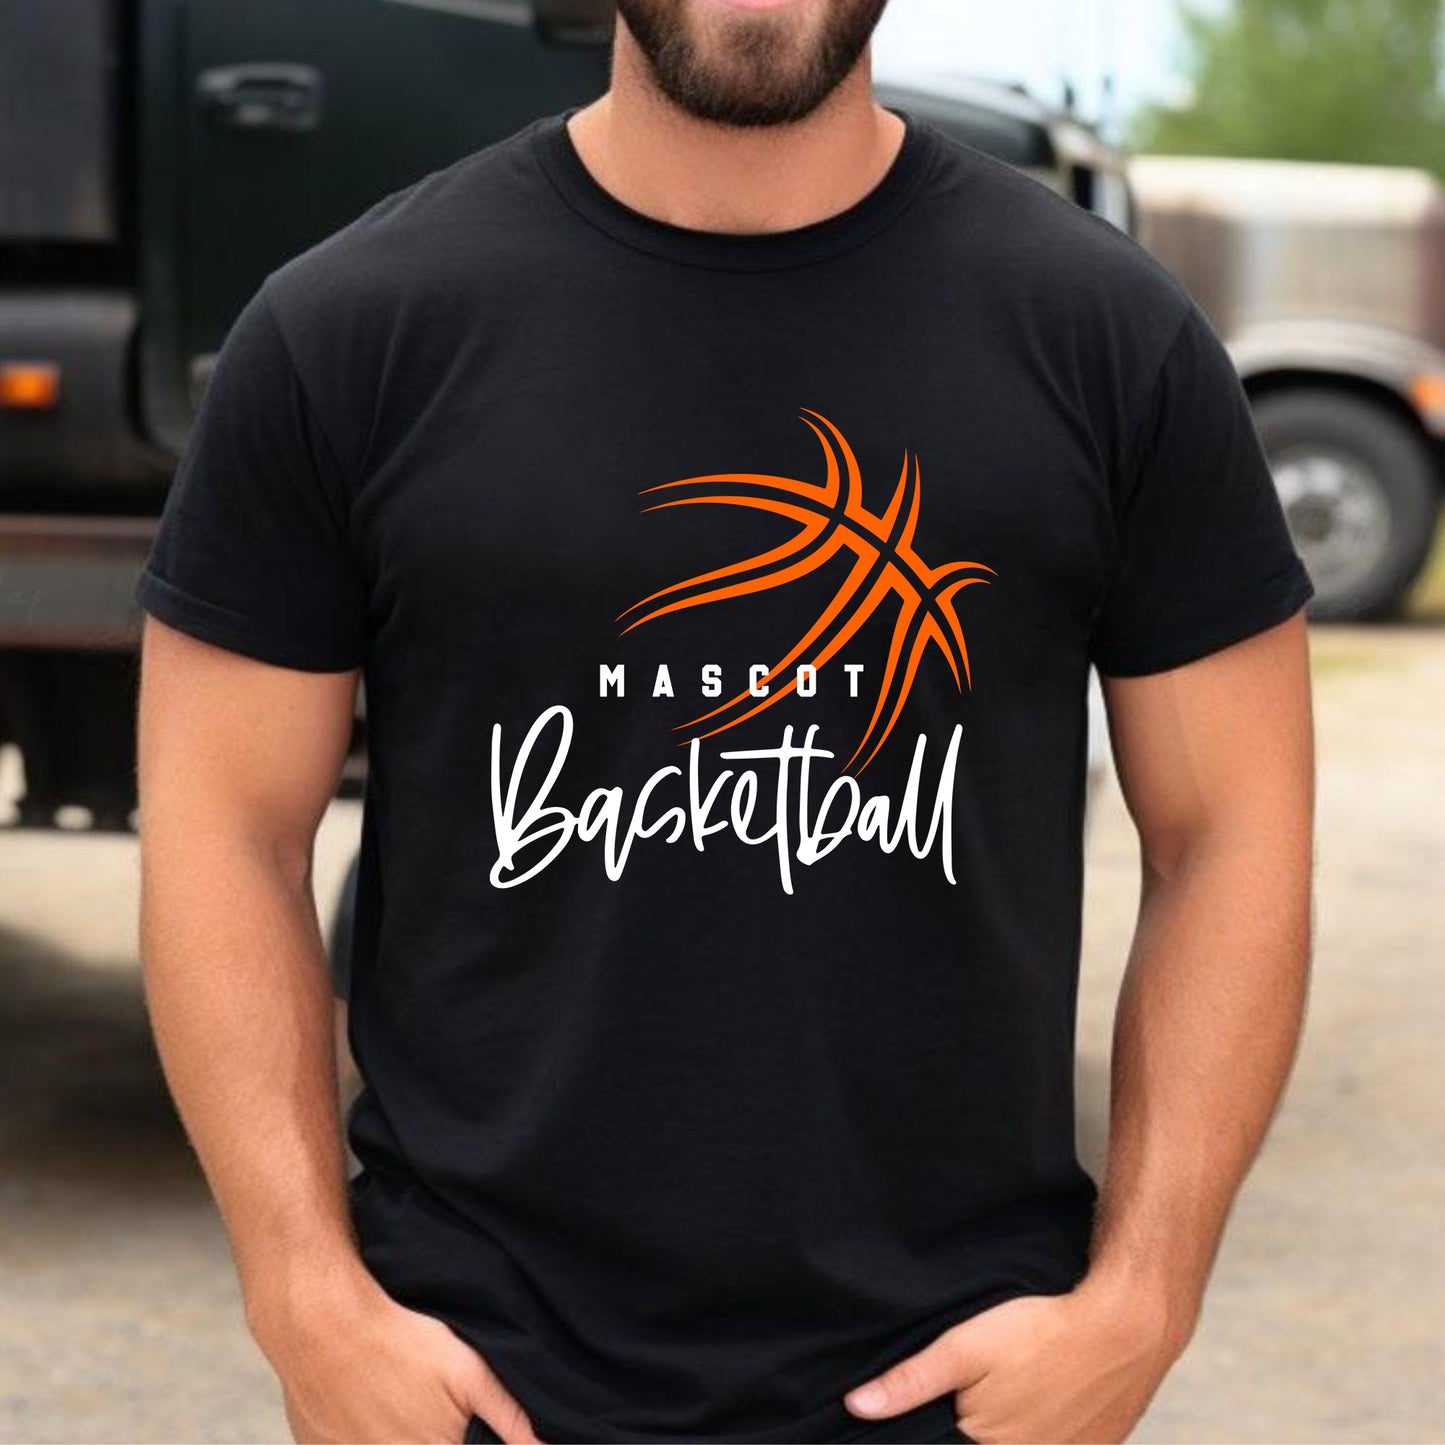 Basketball Team Shirt - Gift for Basketball Team